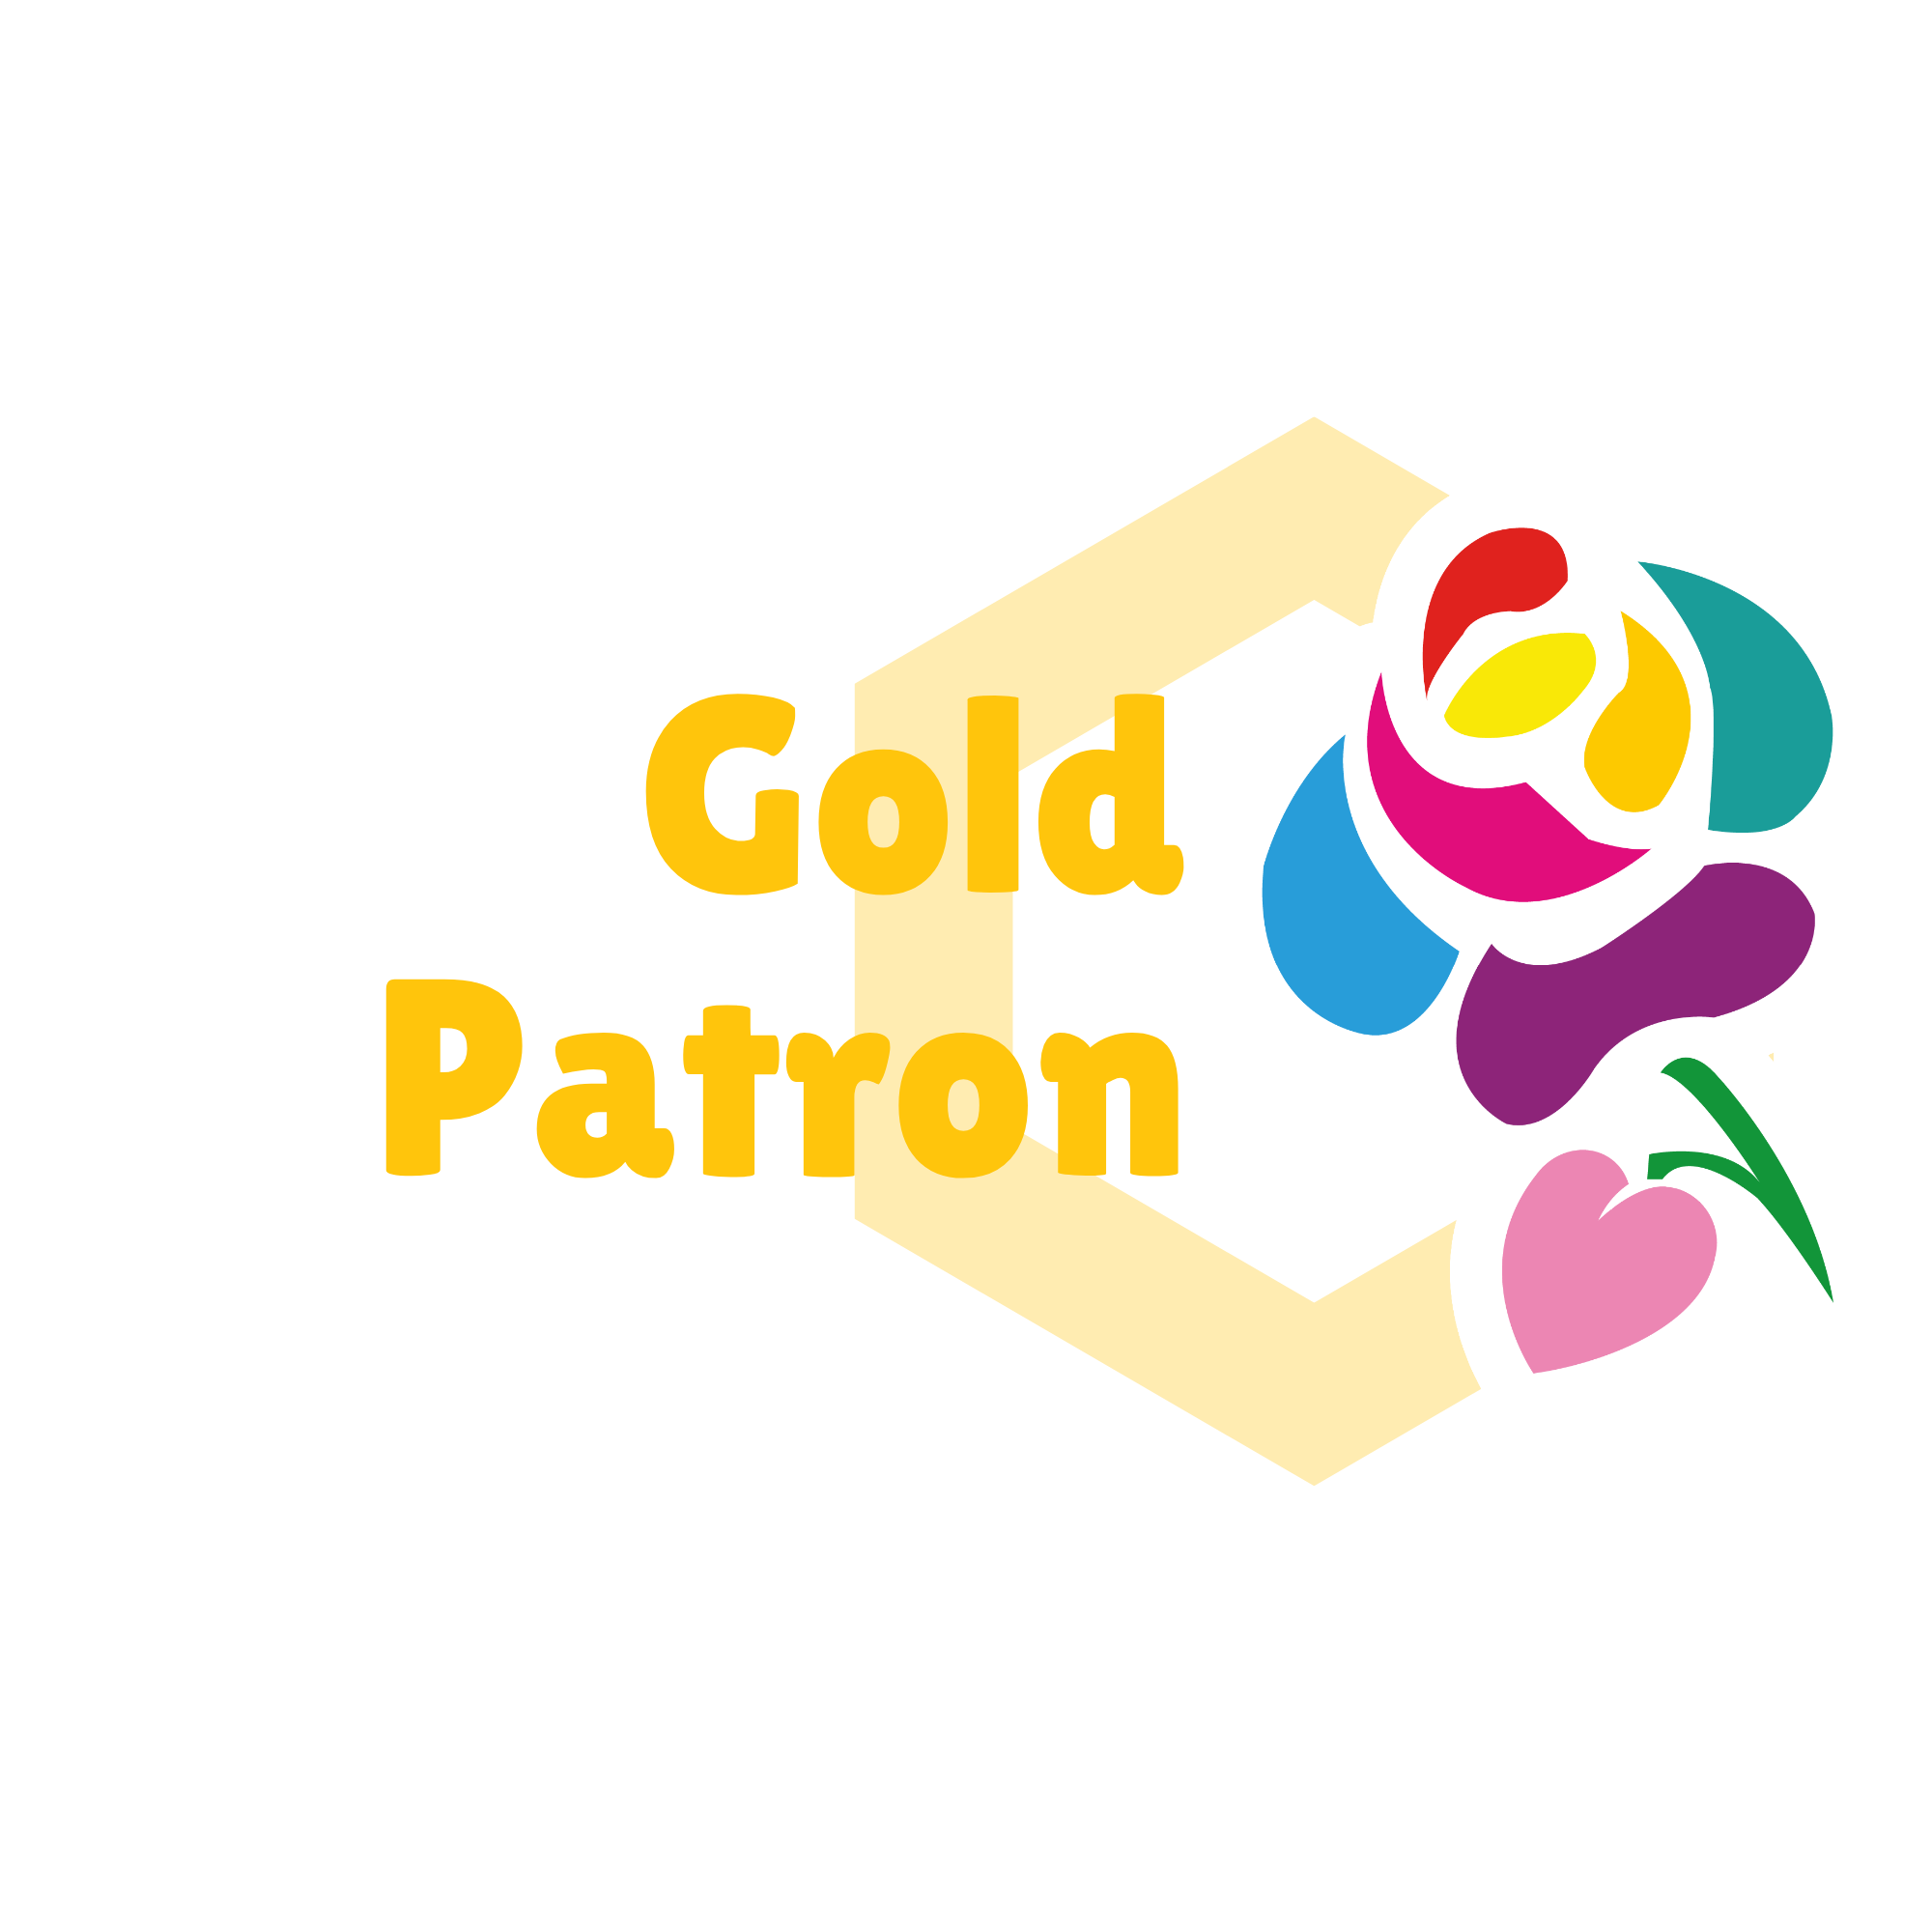 Gold patron